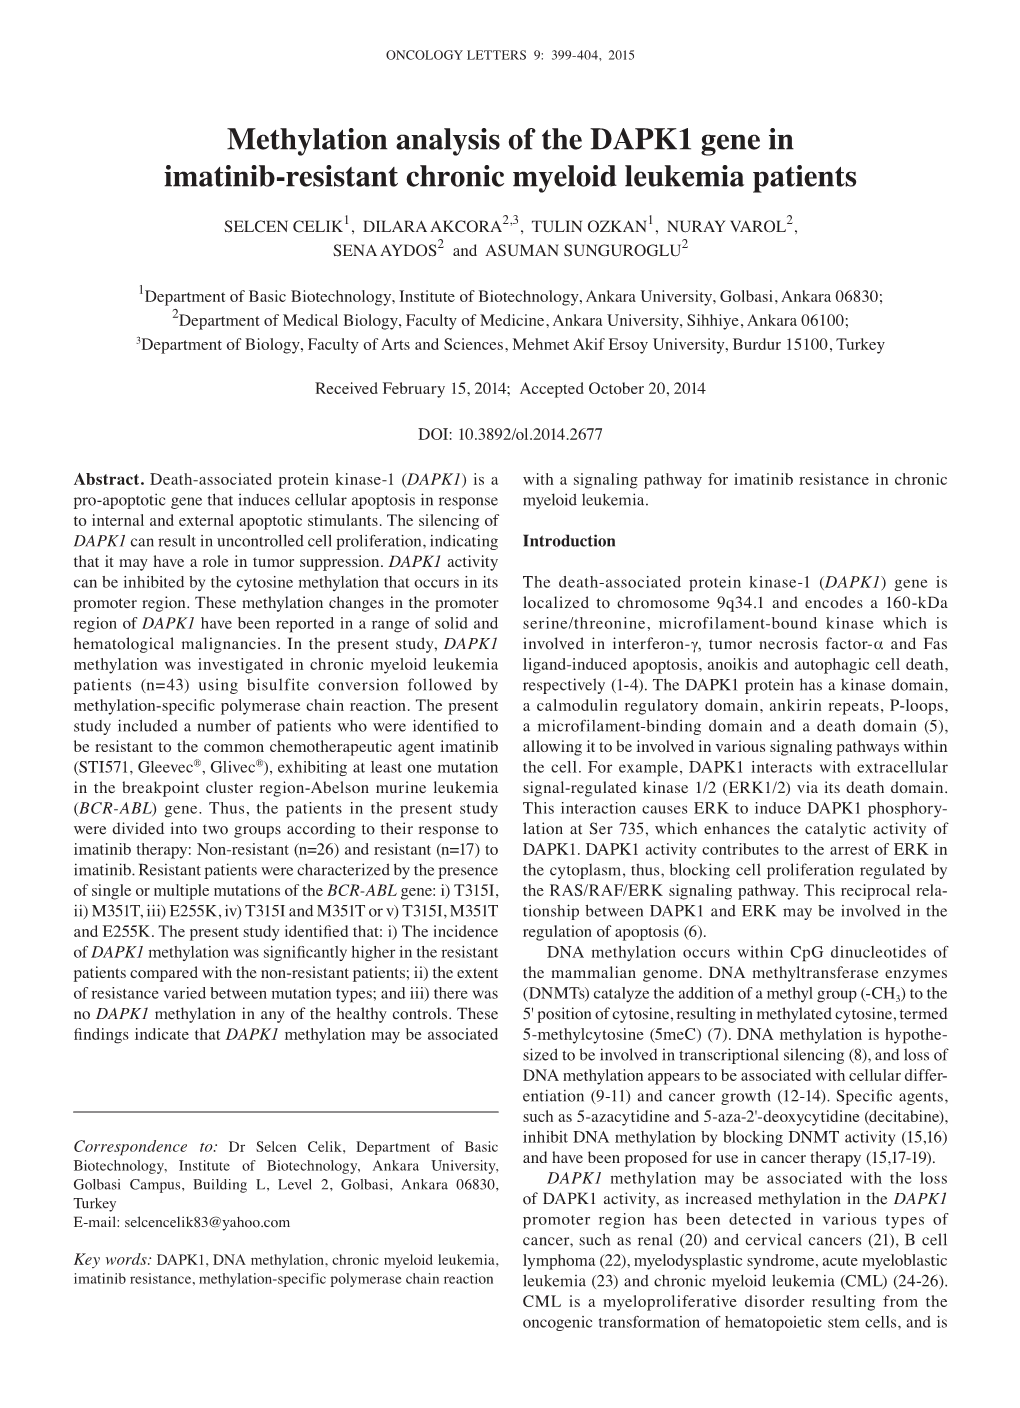 Methylation Analysis of the DAPK1 Gene in Imatinib‑Resistant Chronic Myeloid Leukemia Patients